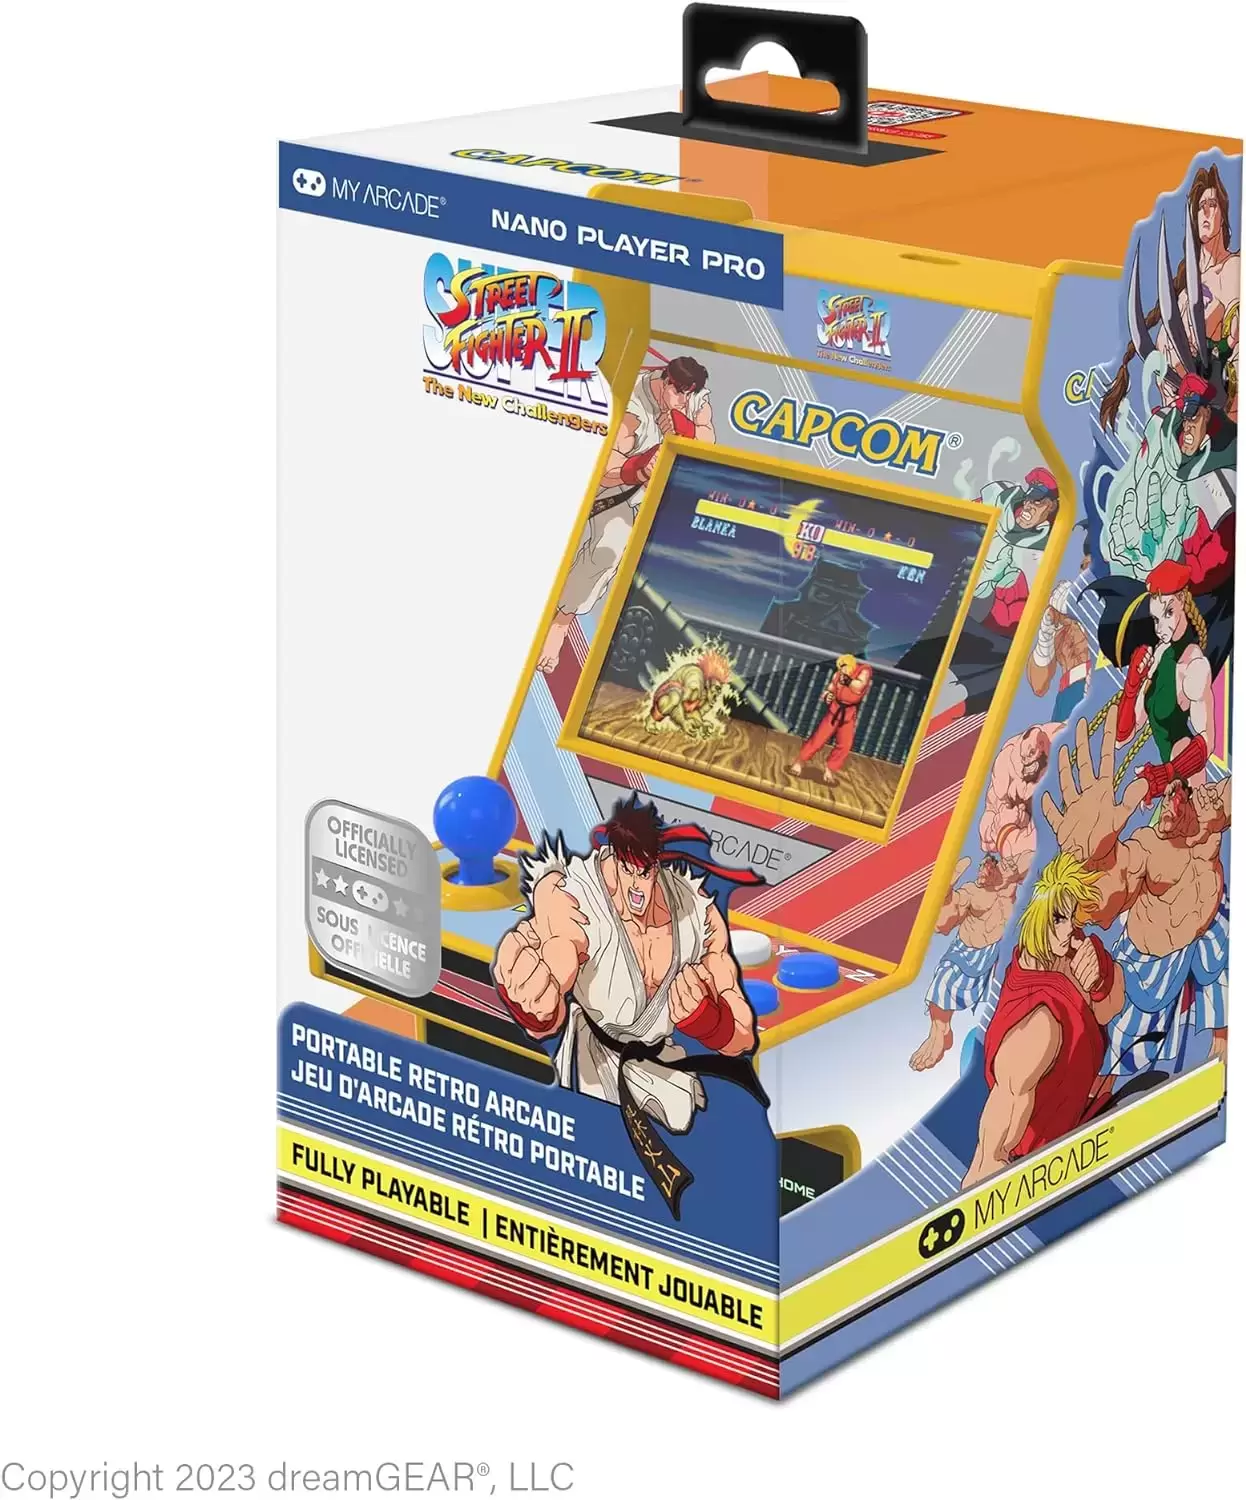 Mini Arcade Classics - My Arcade - Nano Player Pro - Super Street Fighter II